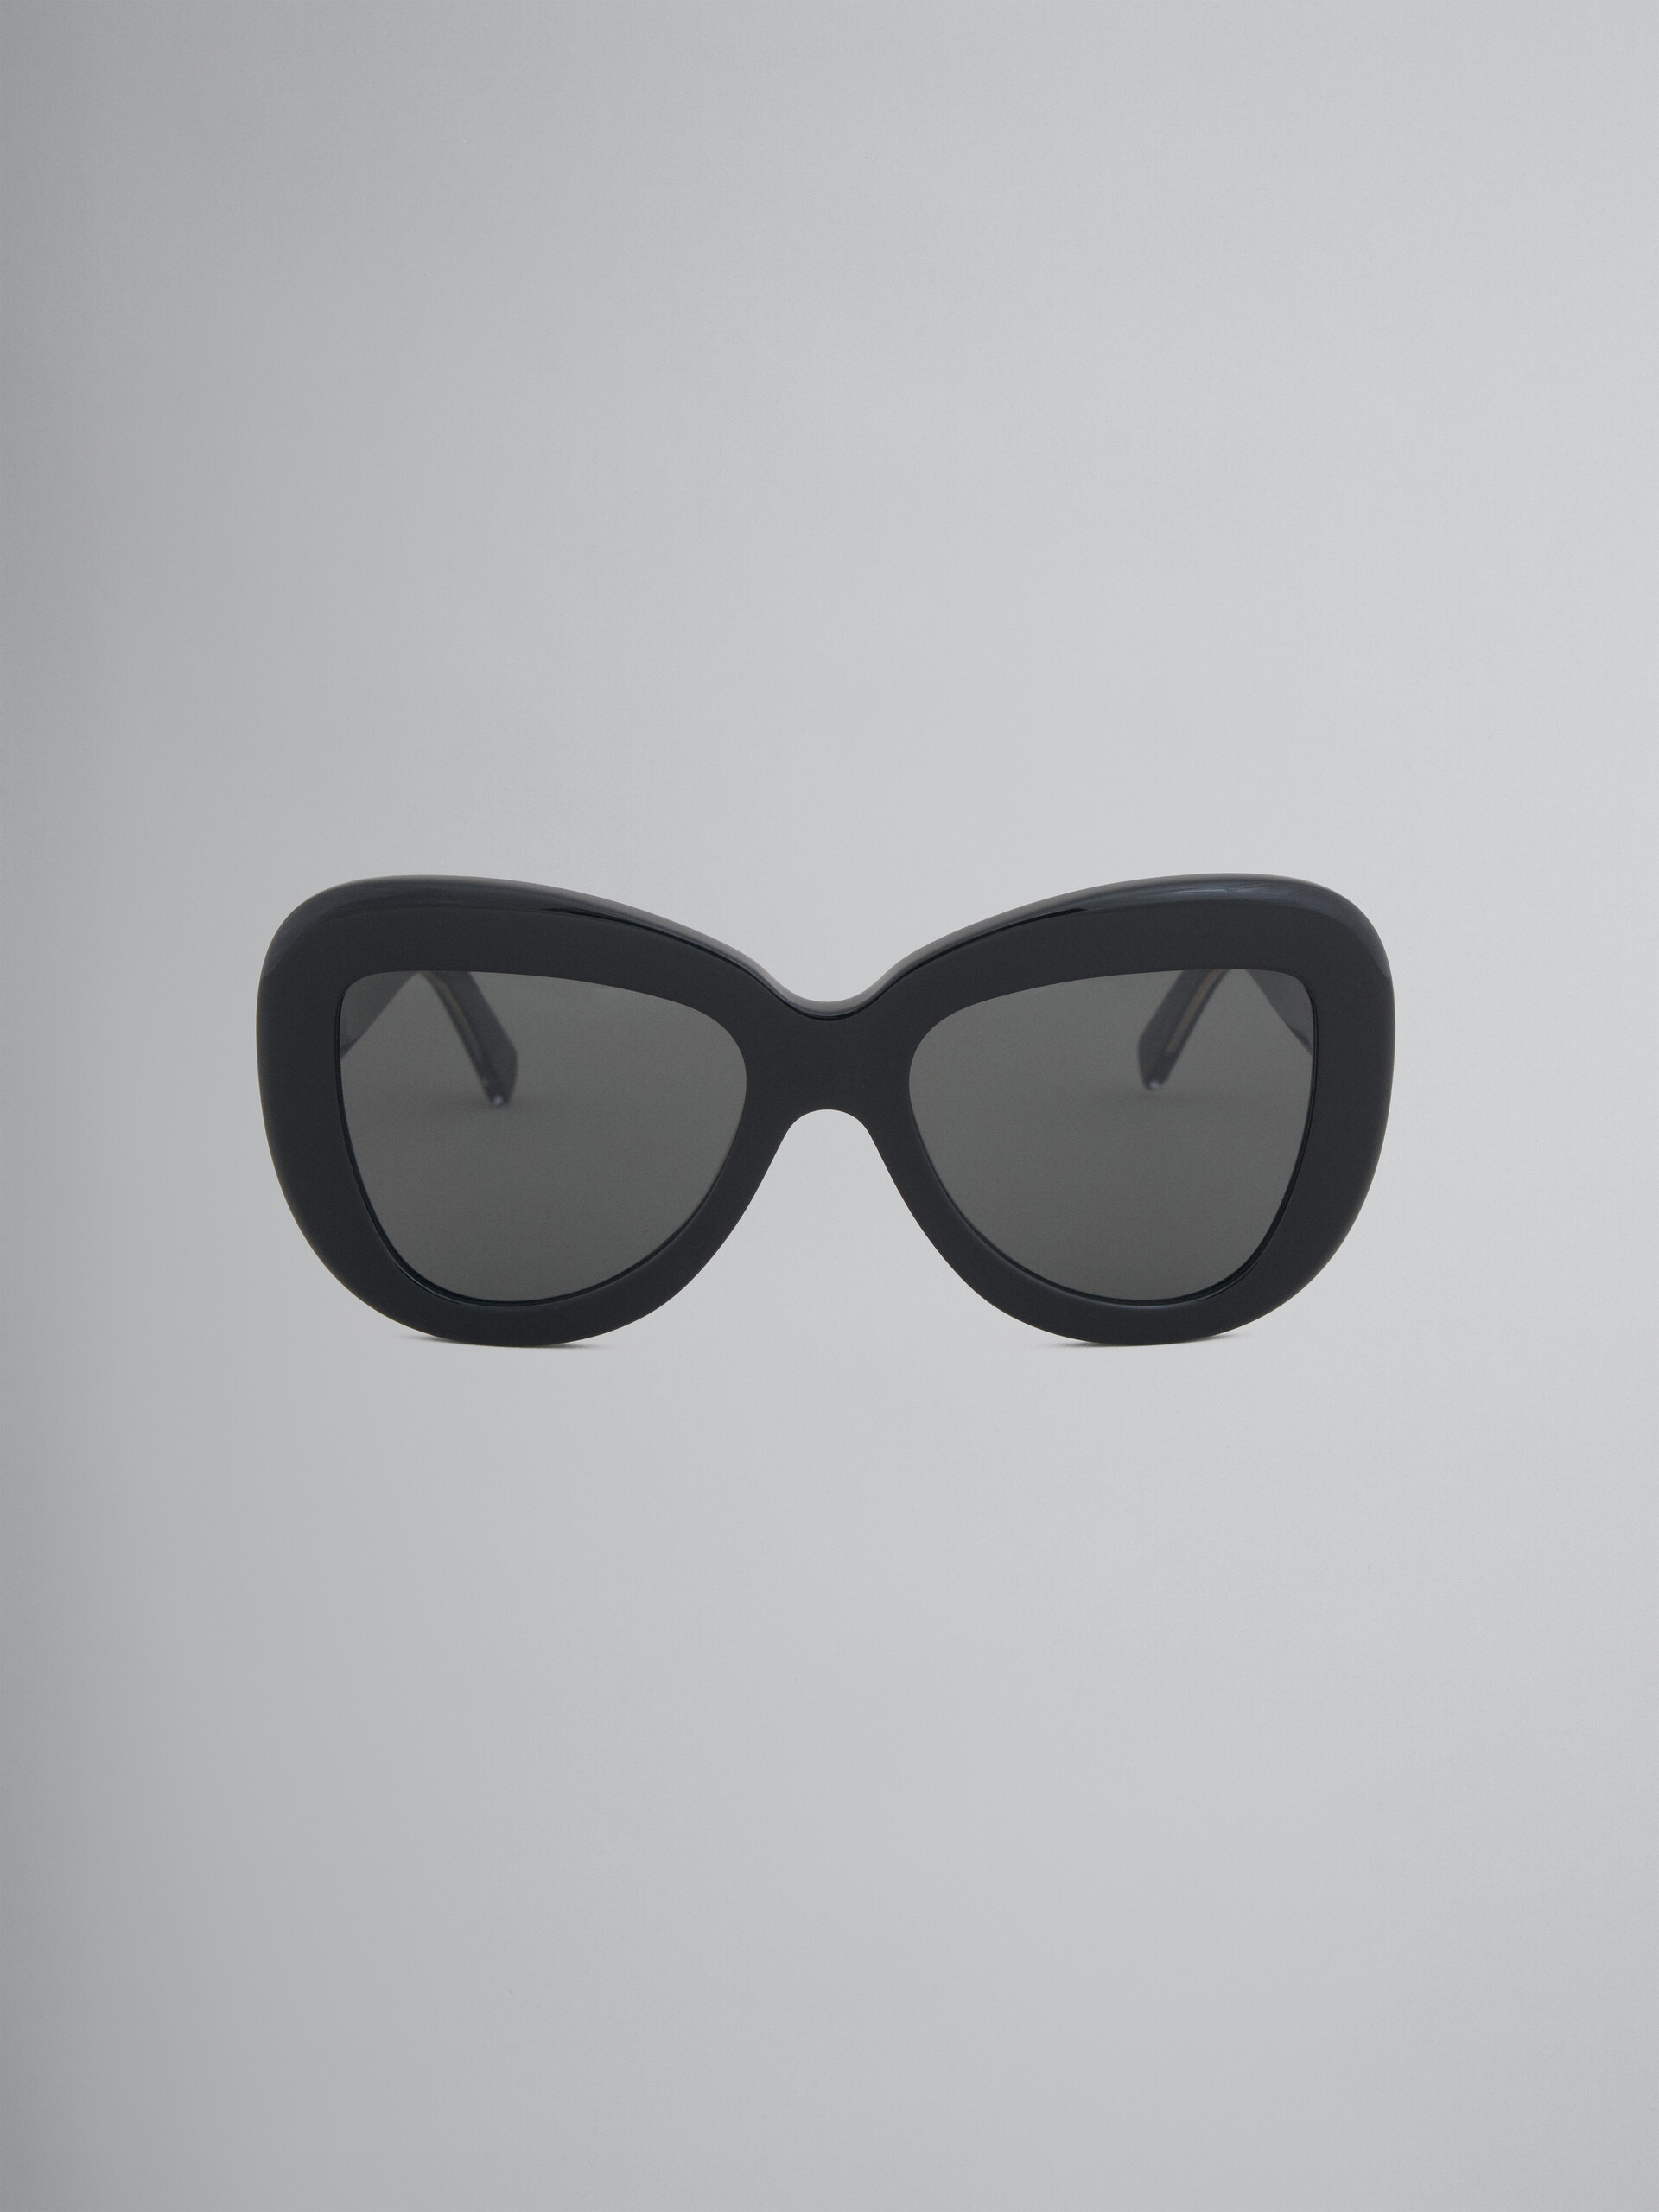 Black acetate ELEPHANT ISLAND sunglasses - Optical - Image 1